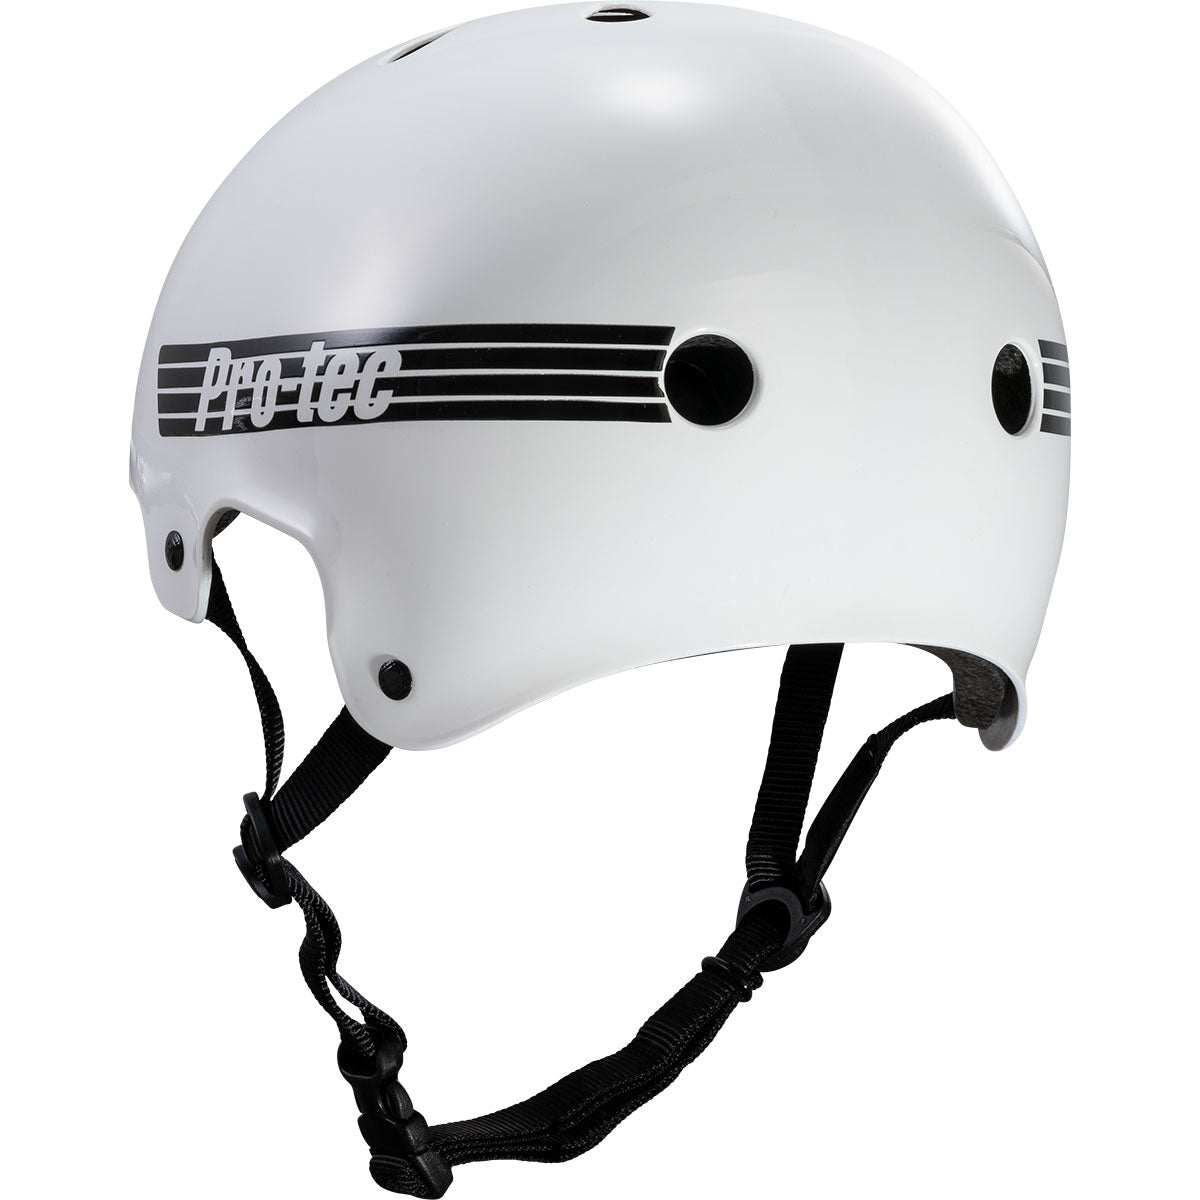 Pro-Tec Old School Certified Helmet - Gloss White image 2